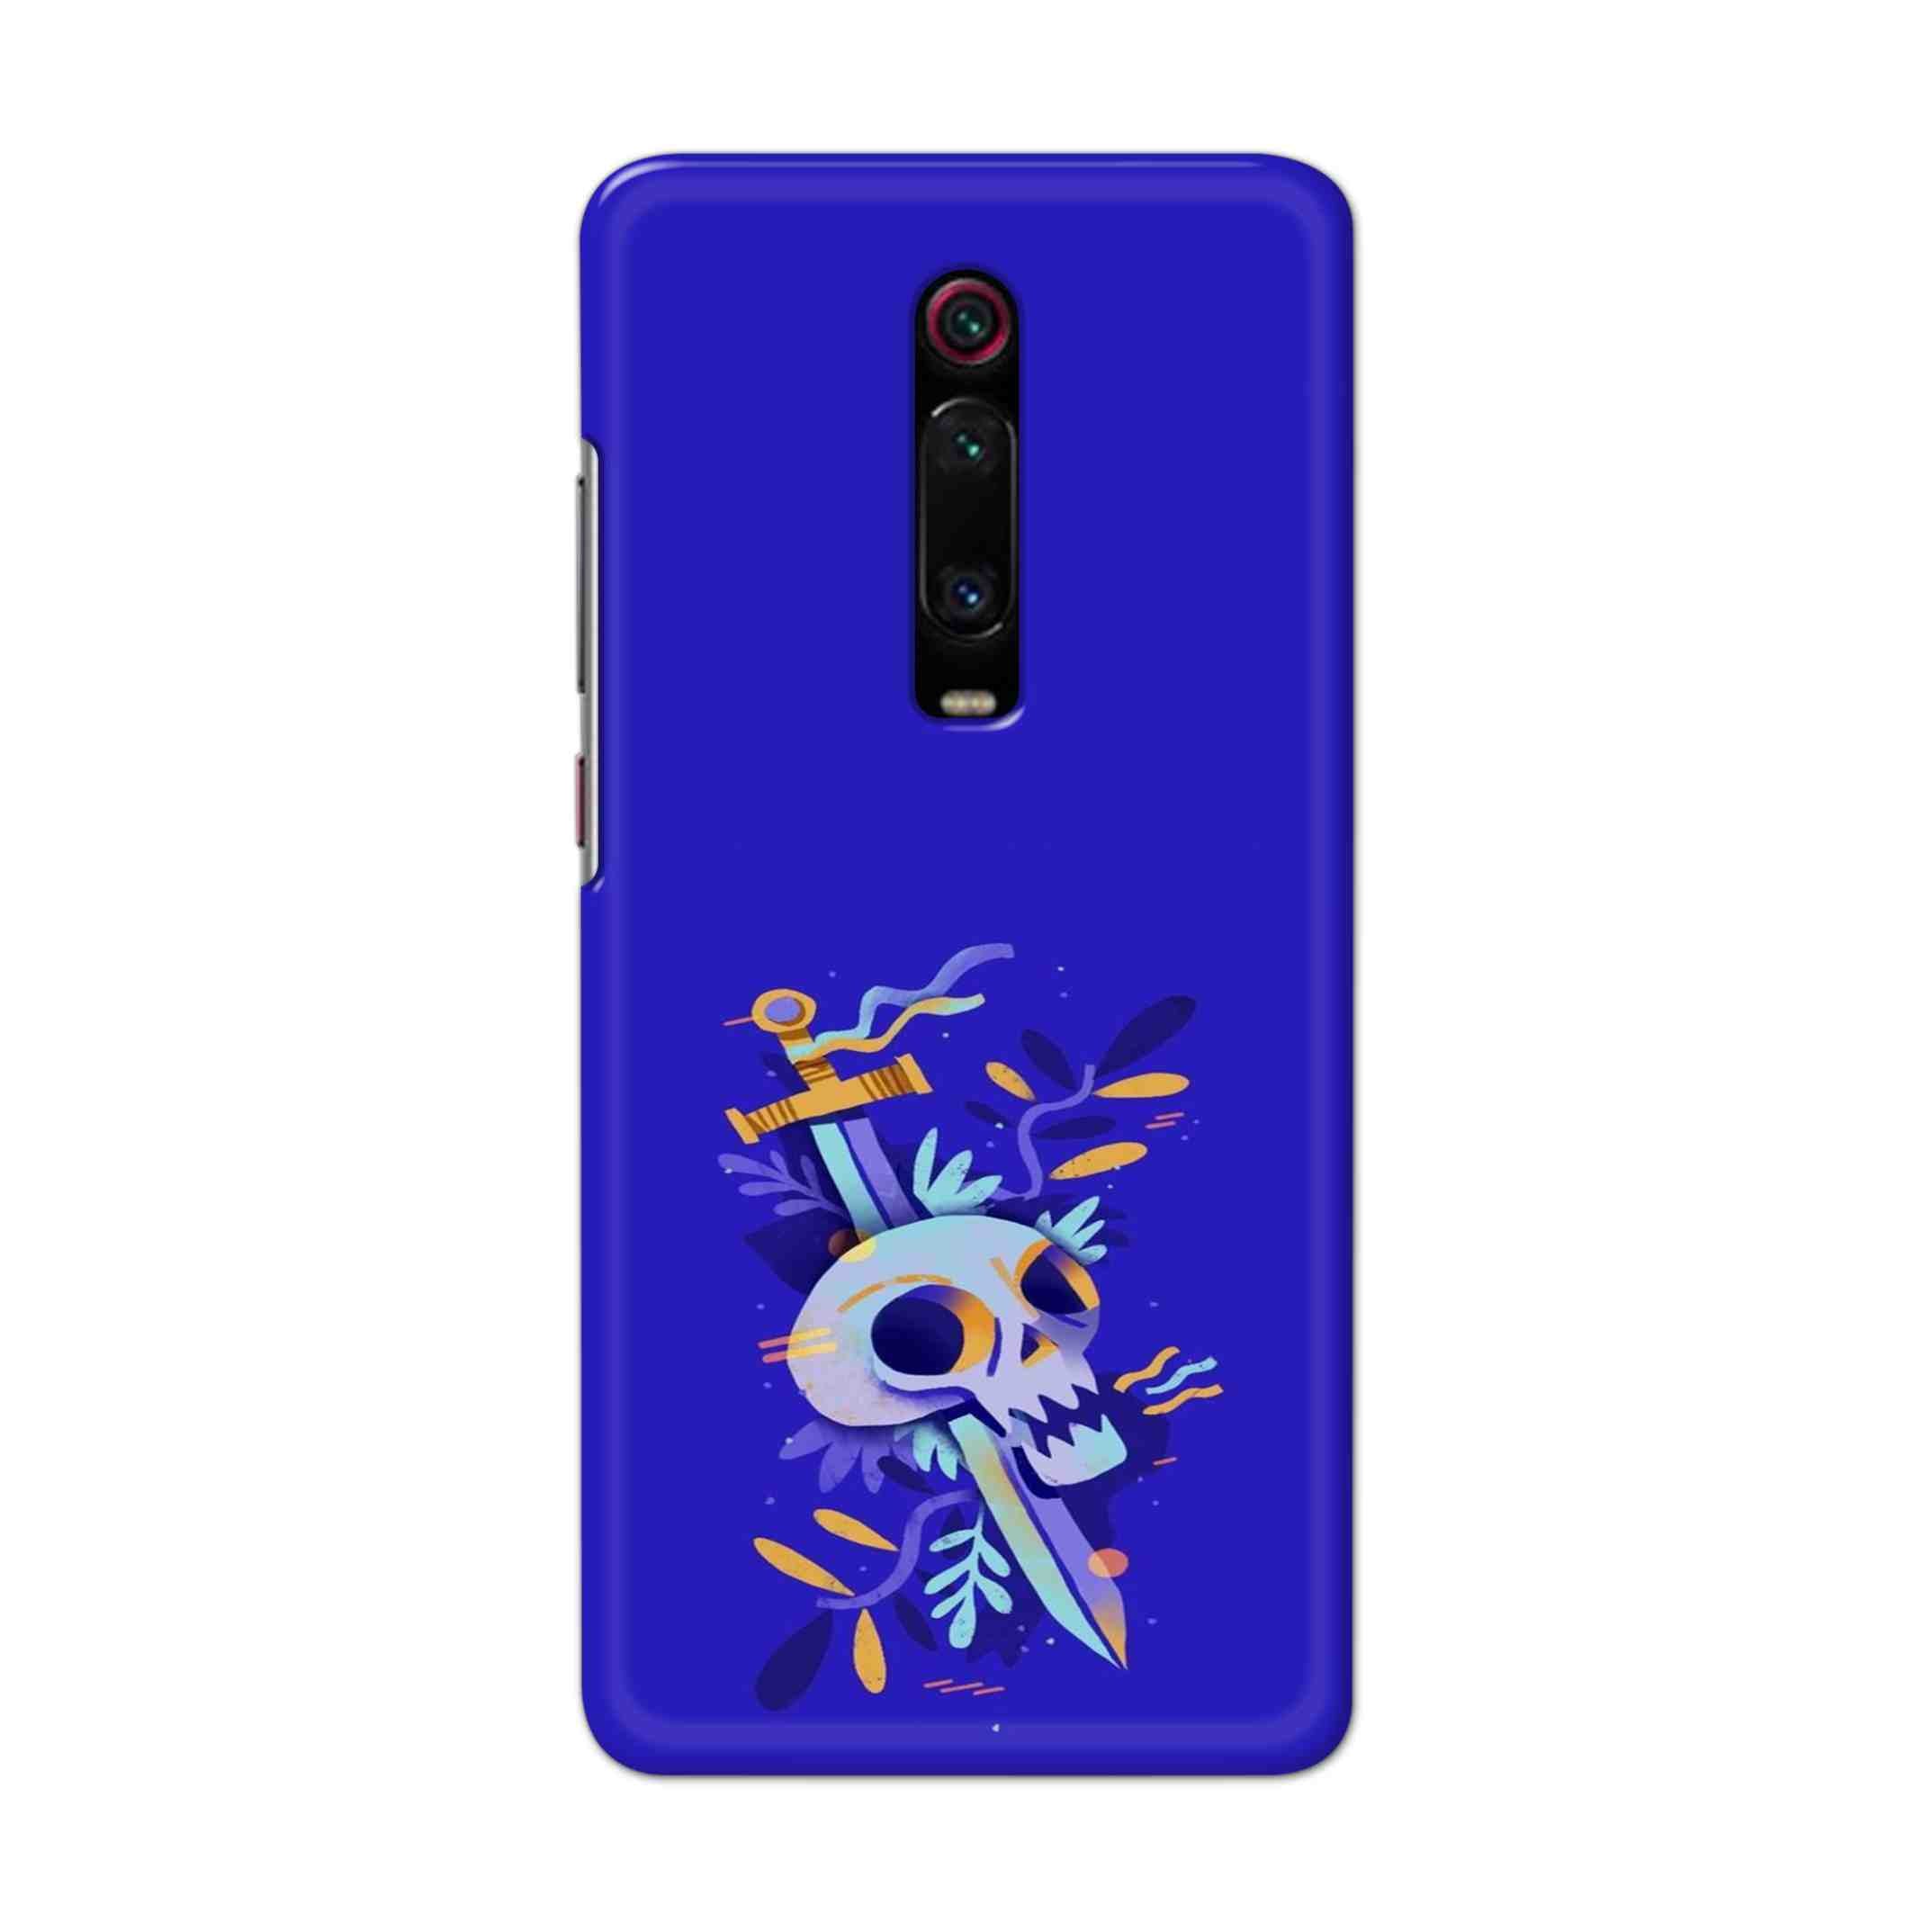 Buy Blue Skull Hard Back Mobile Phone Case Cover For Xiaomi Redmi K20 Online